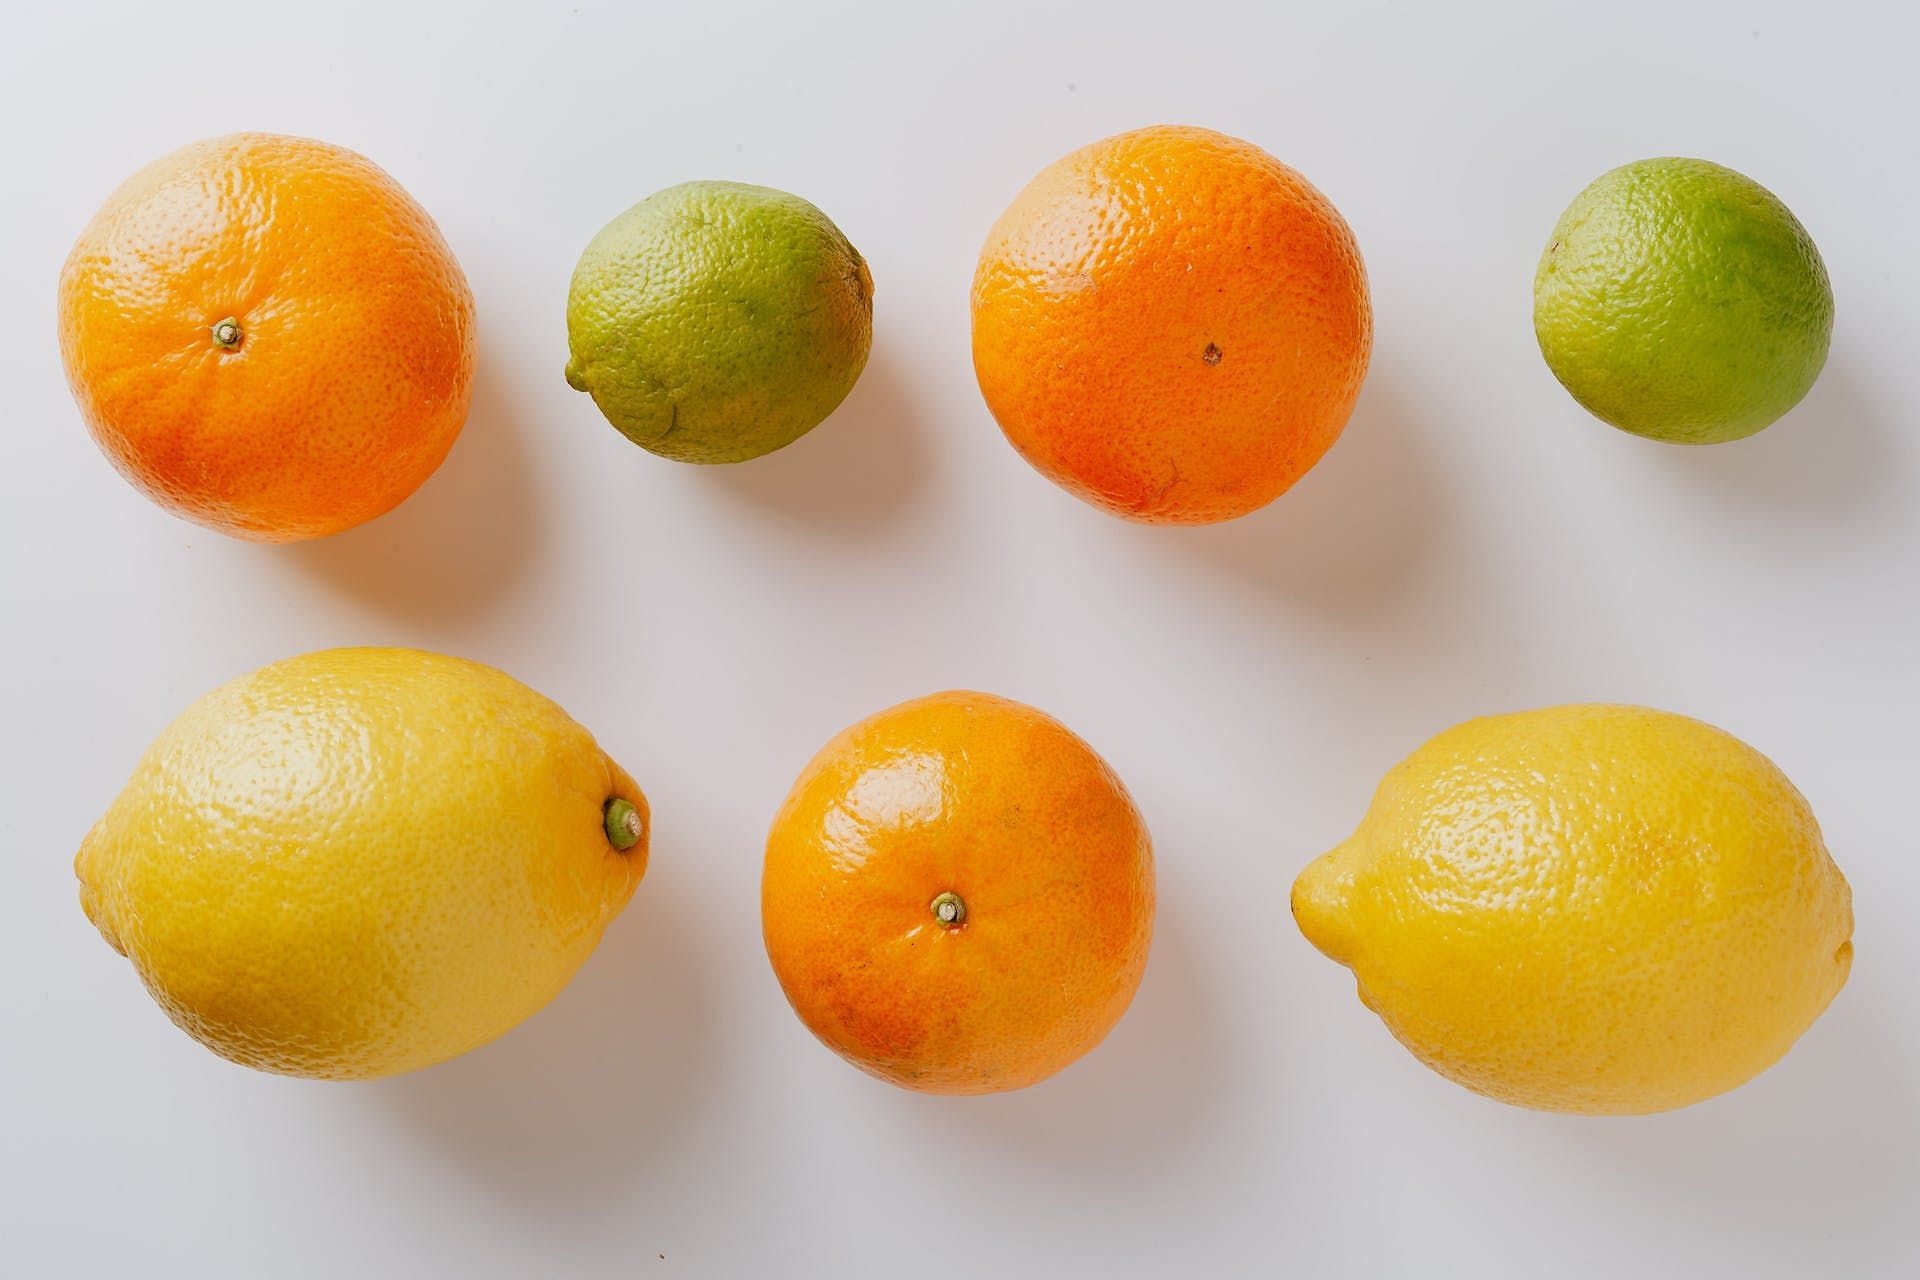 Frequent consumption of citrus fruits can damage teeth. (Image via Pexels/Karolina Grabowska)